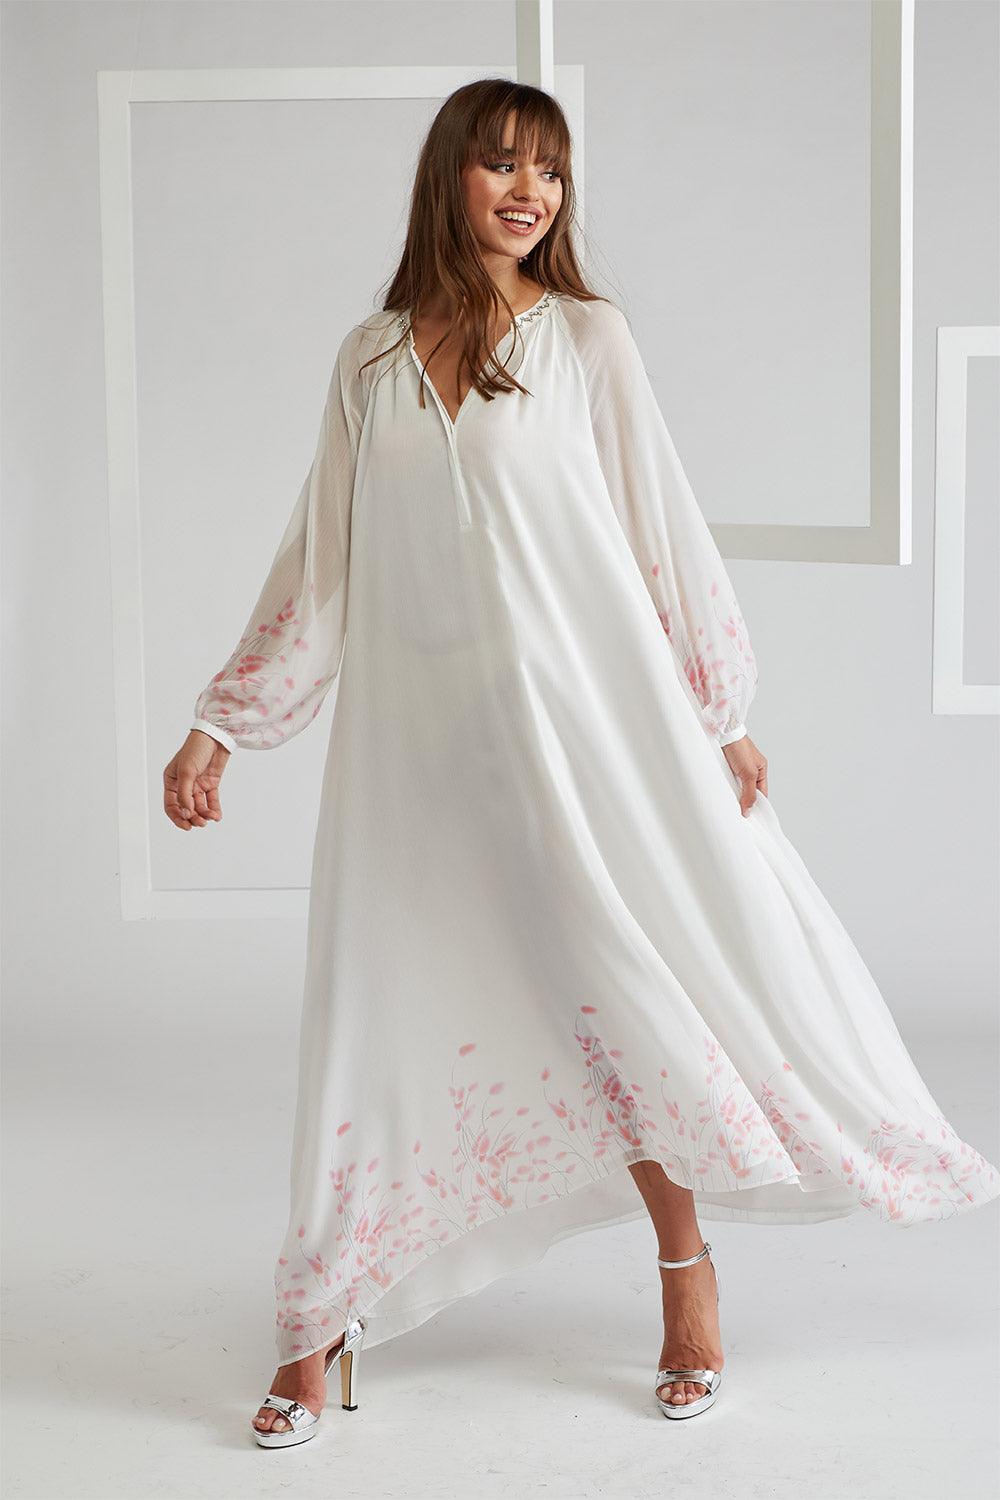 Silk Chiffon Dress Triangular Sleeve White Emy - Bocan Couture